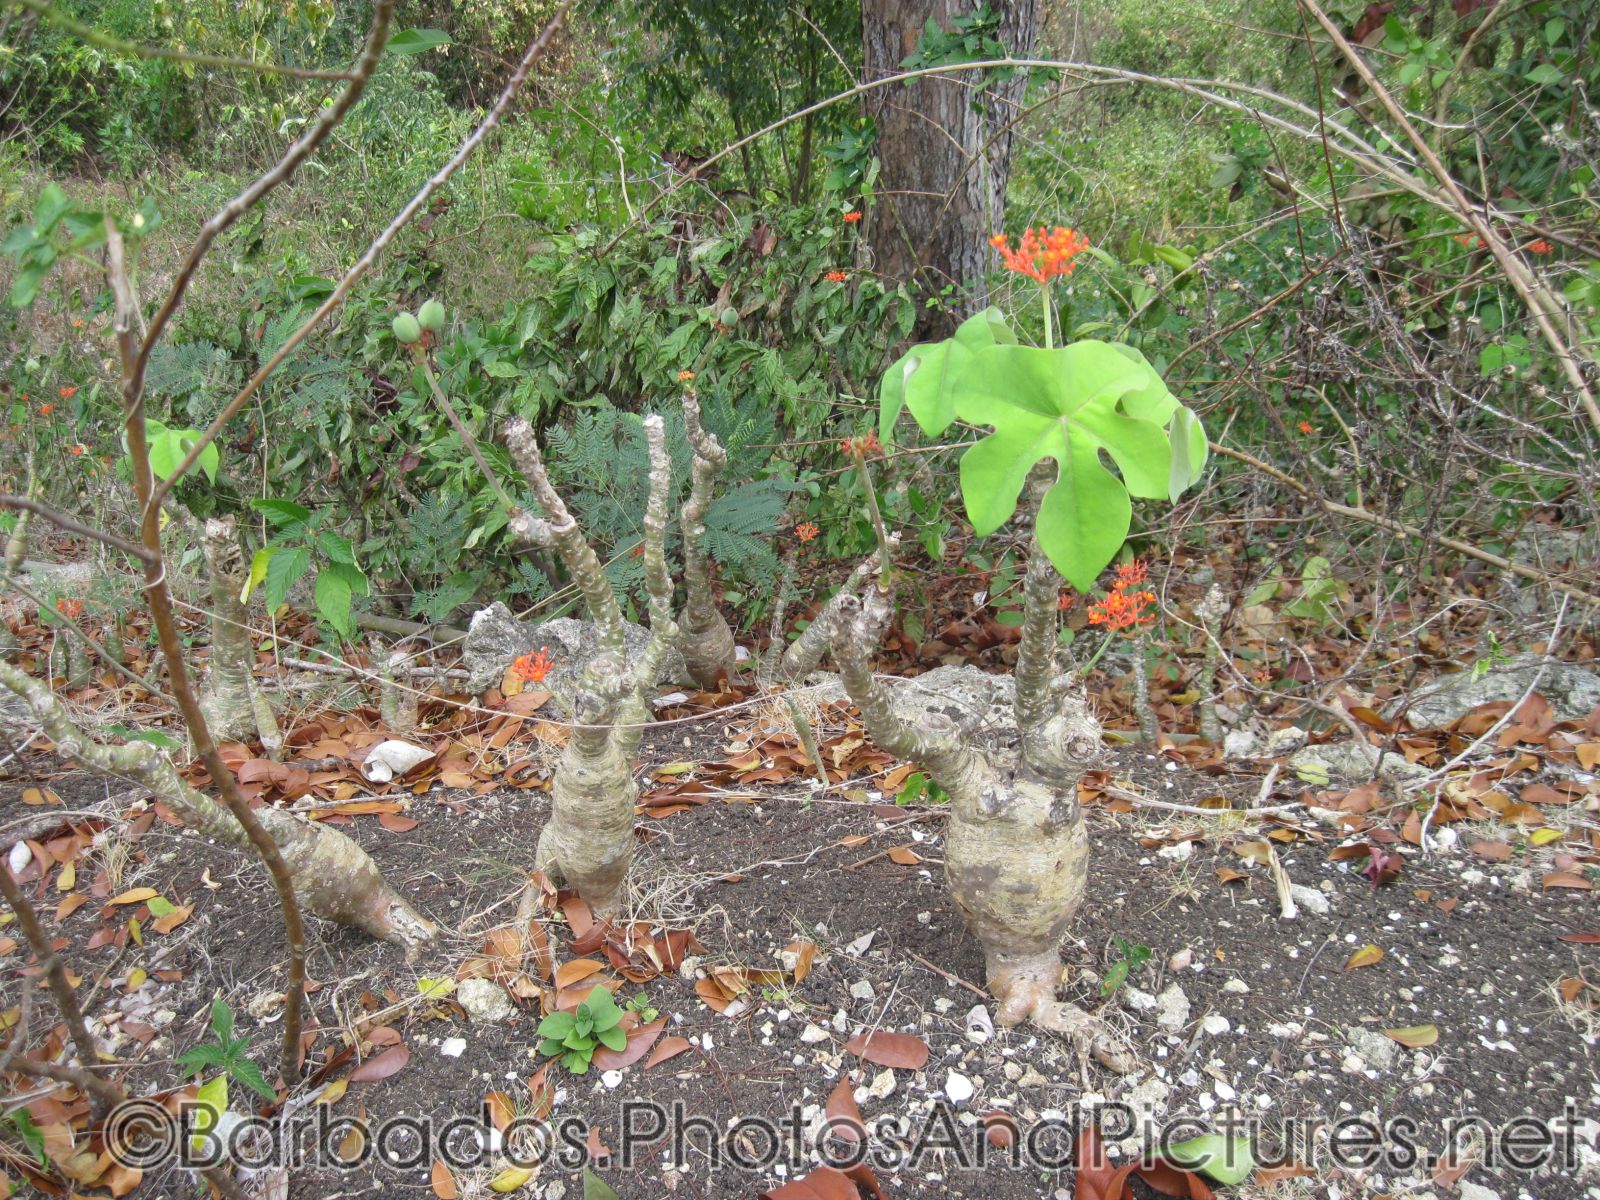 Desert rose plants at Gun Hill Signal Station in Barbados (2).jpg
